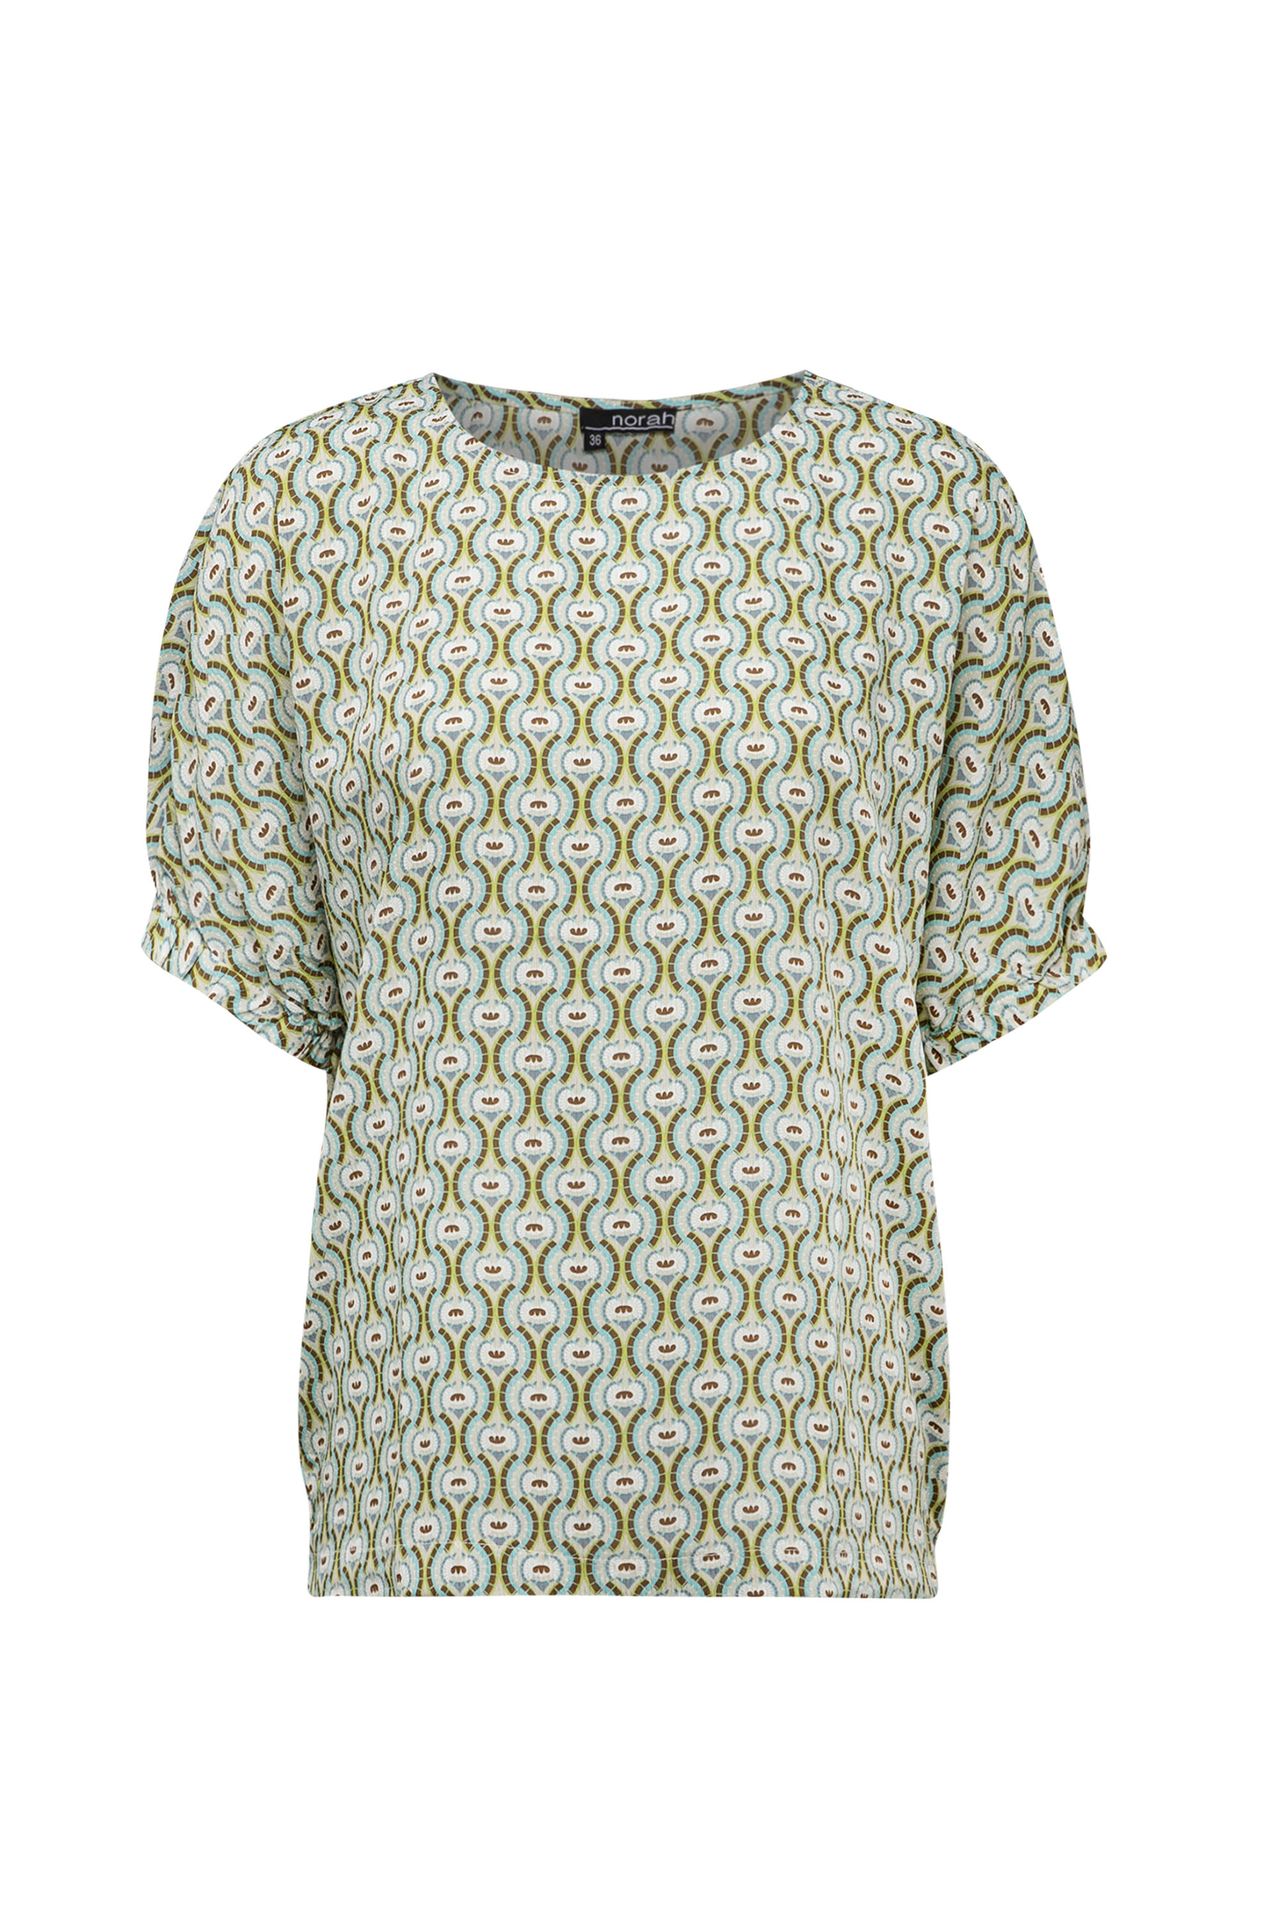 Norah Groene blouse multicolor 213921-002